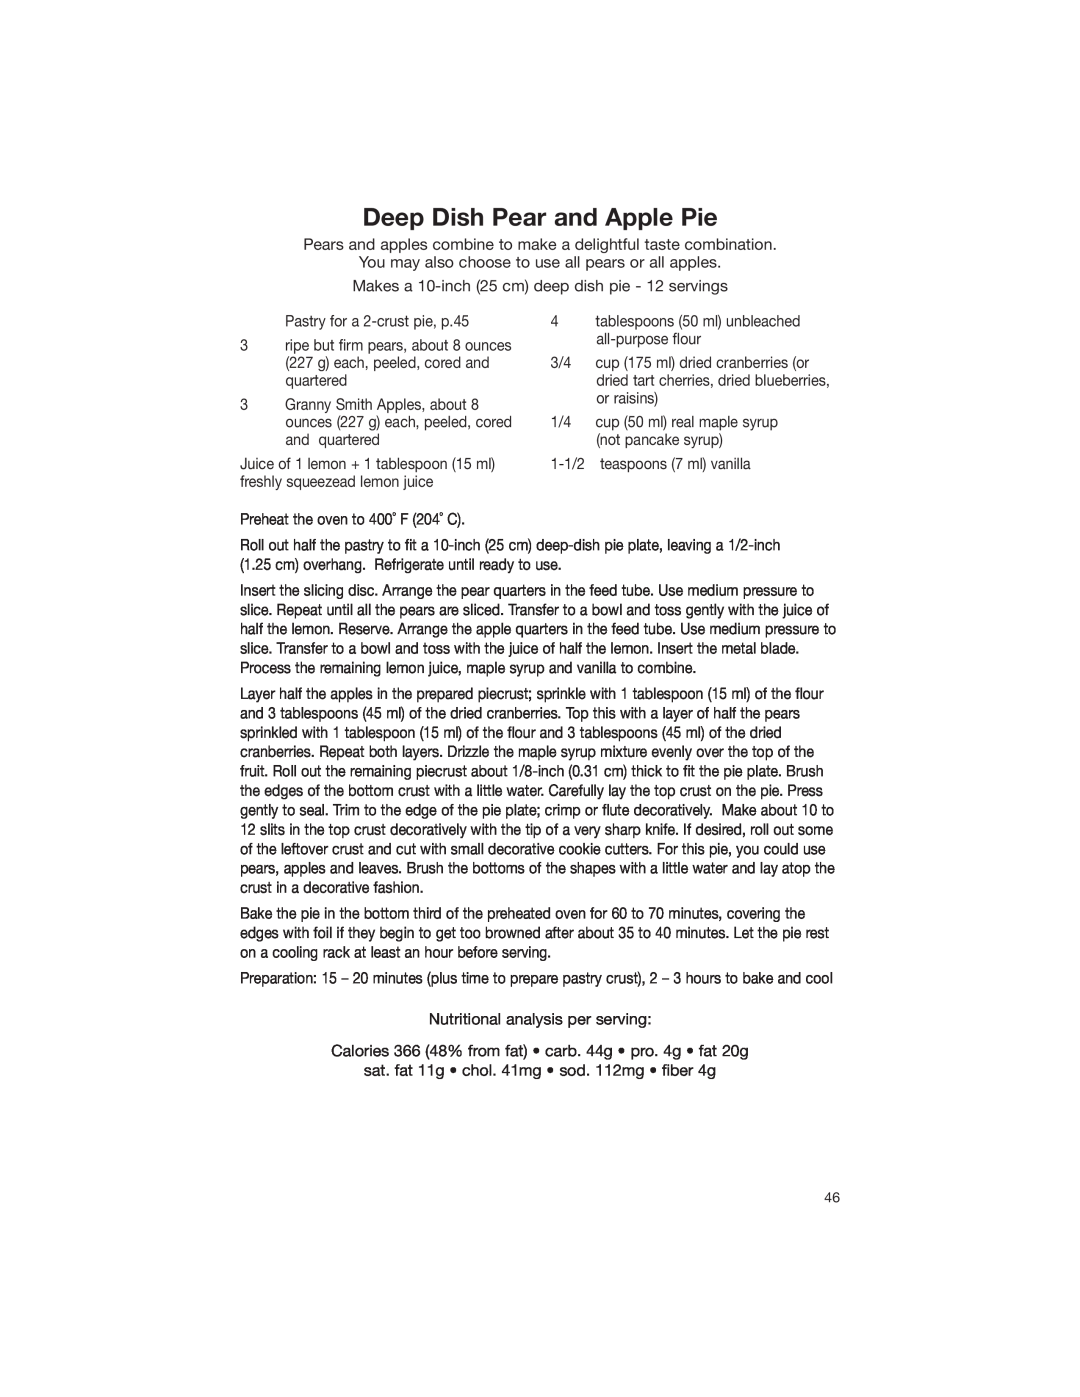 Cuisinart DLC-2007NC manual Deep Dish Pear and Apple Pie 